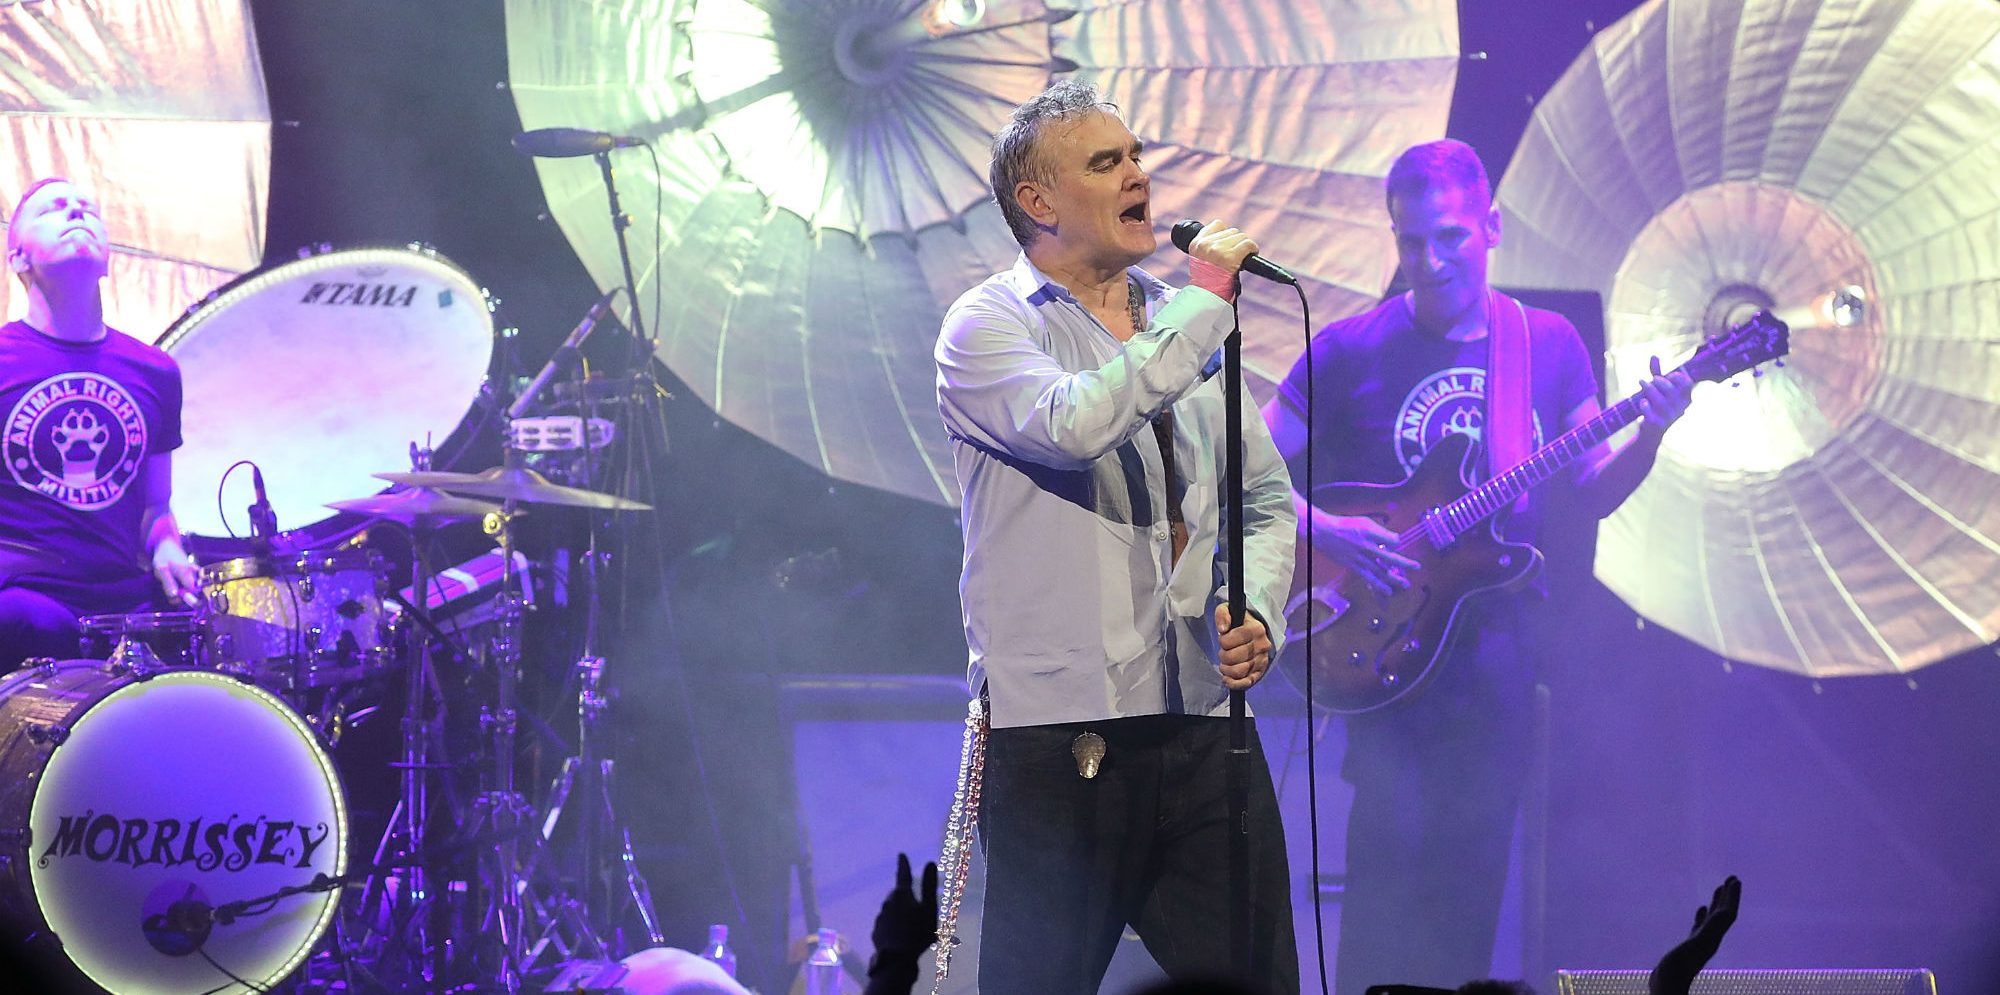 SORPRESA: Morrissey tocó un tema de The Smiths en vivo por primera vez